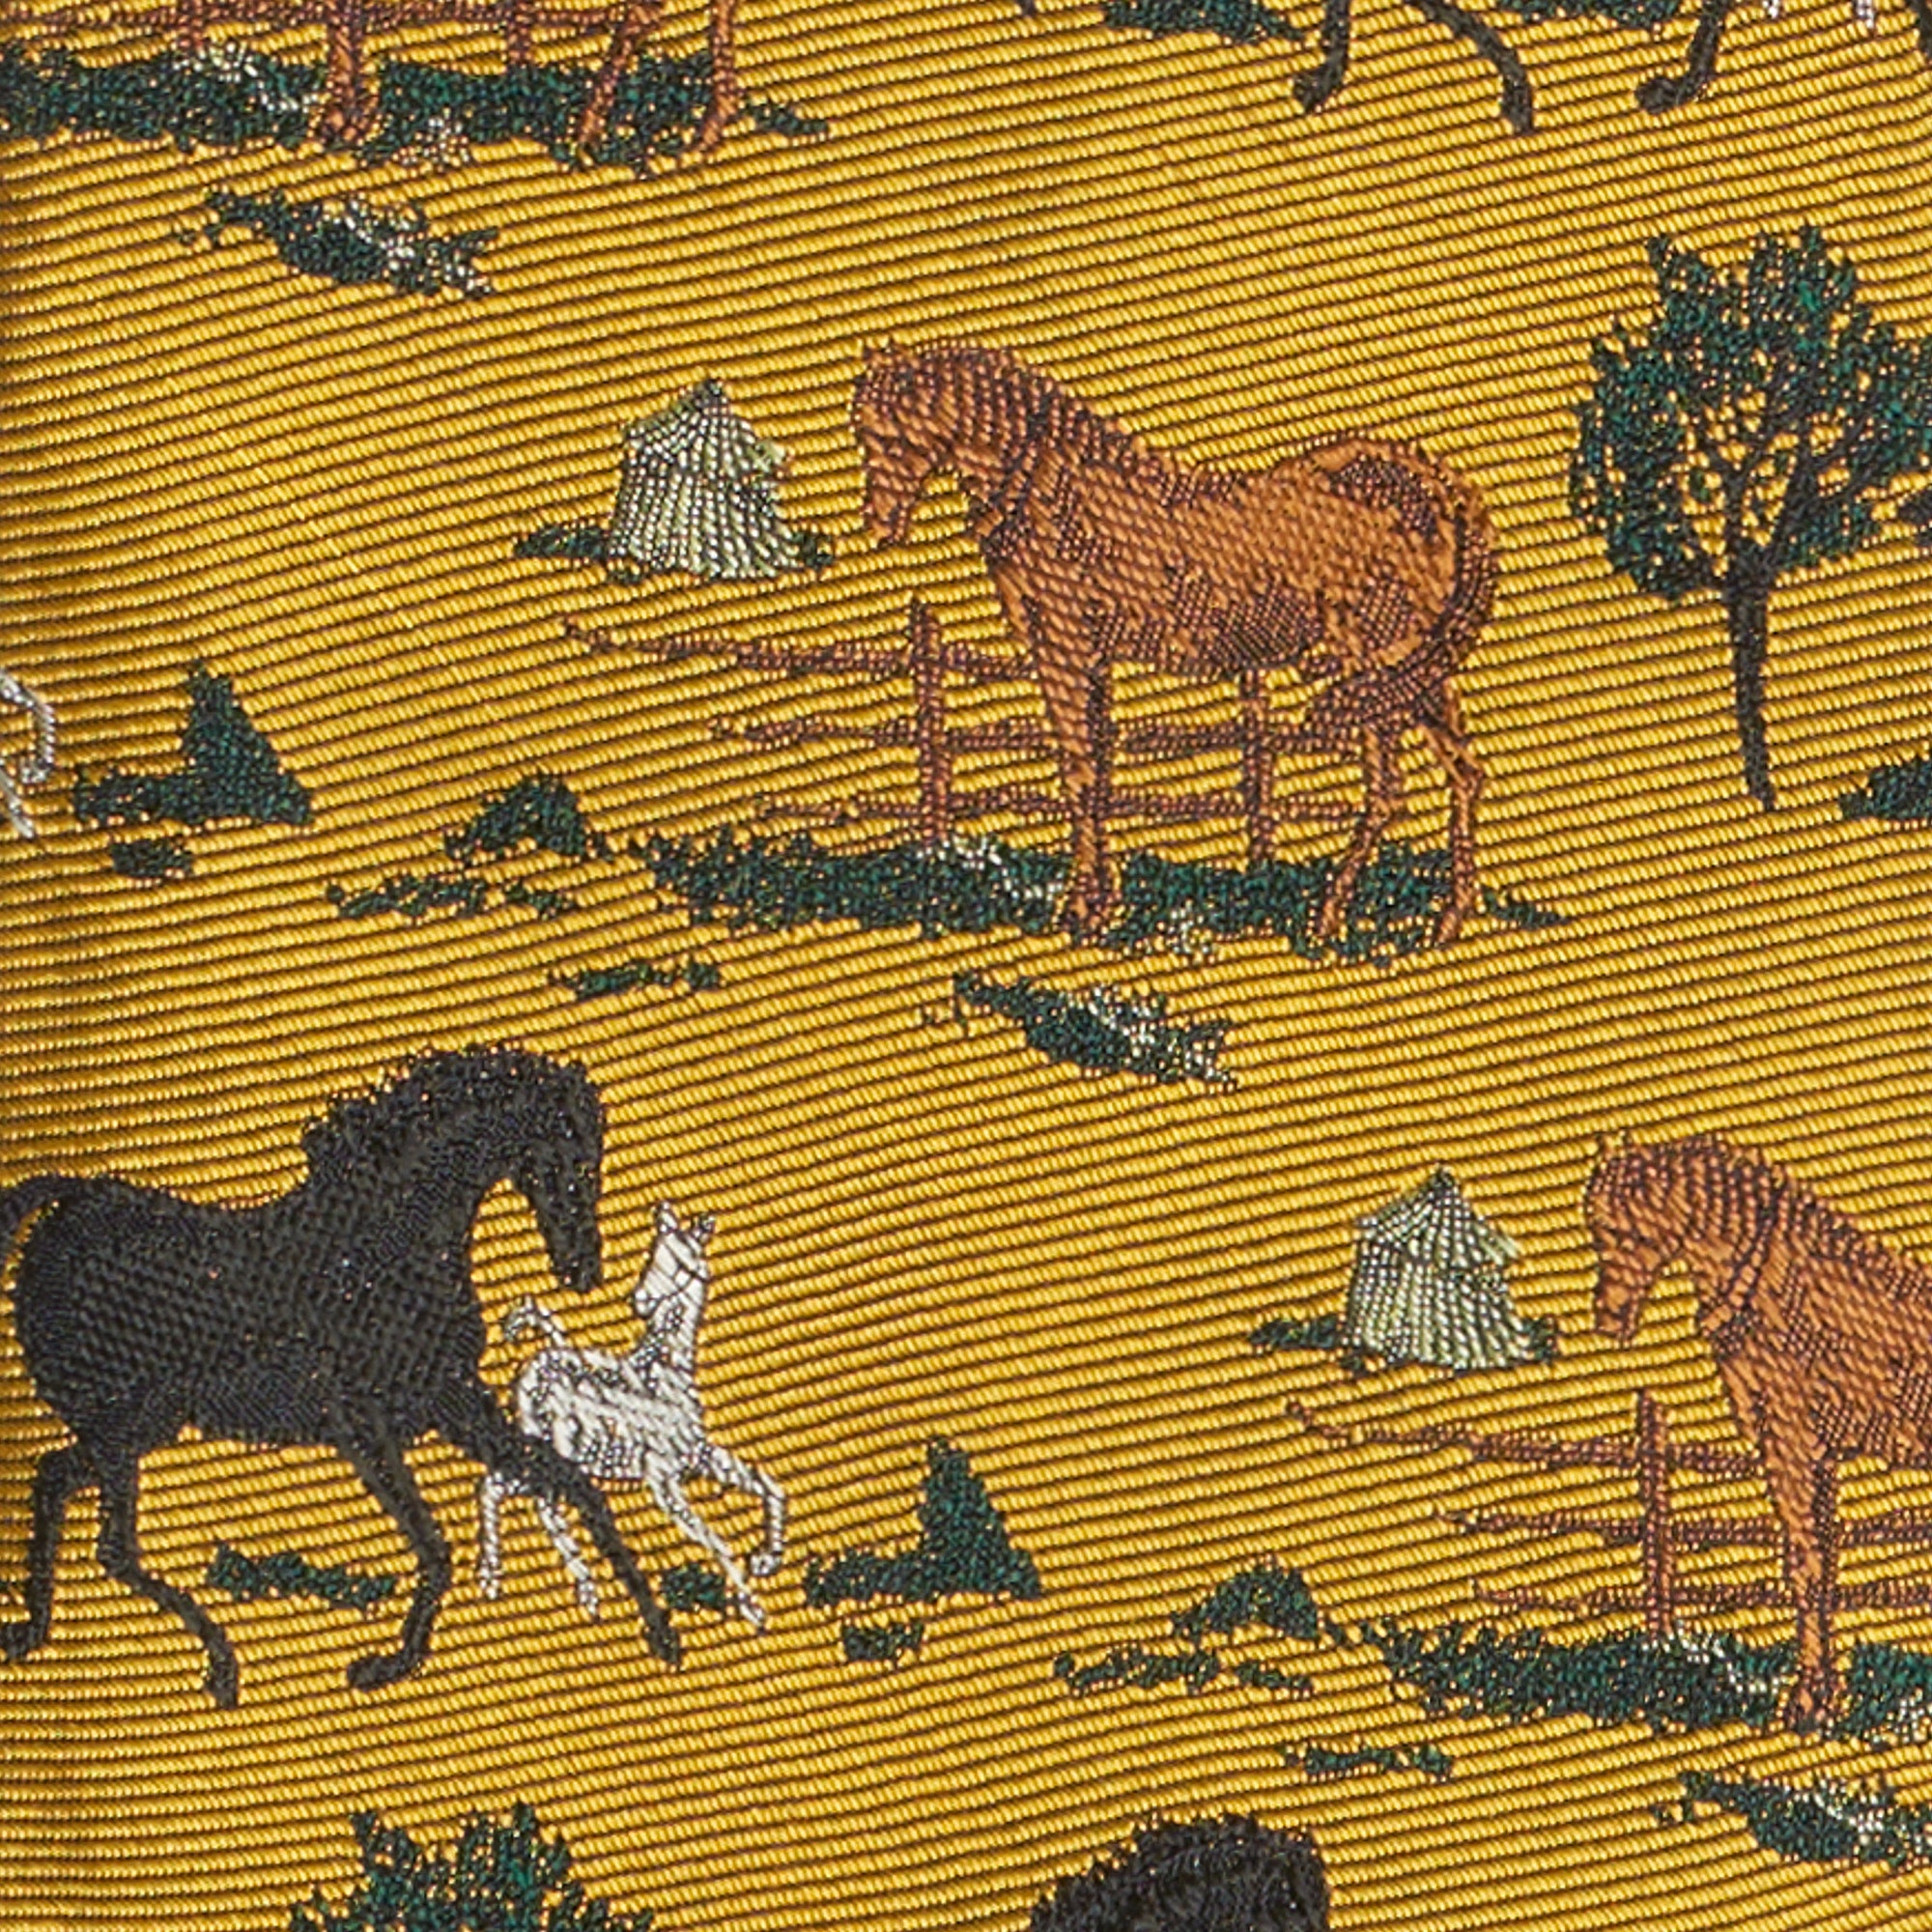 JAY KOS New York Handmade Yellow Horse Design Silk Tie JAY KOS